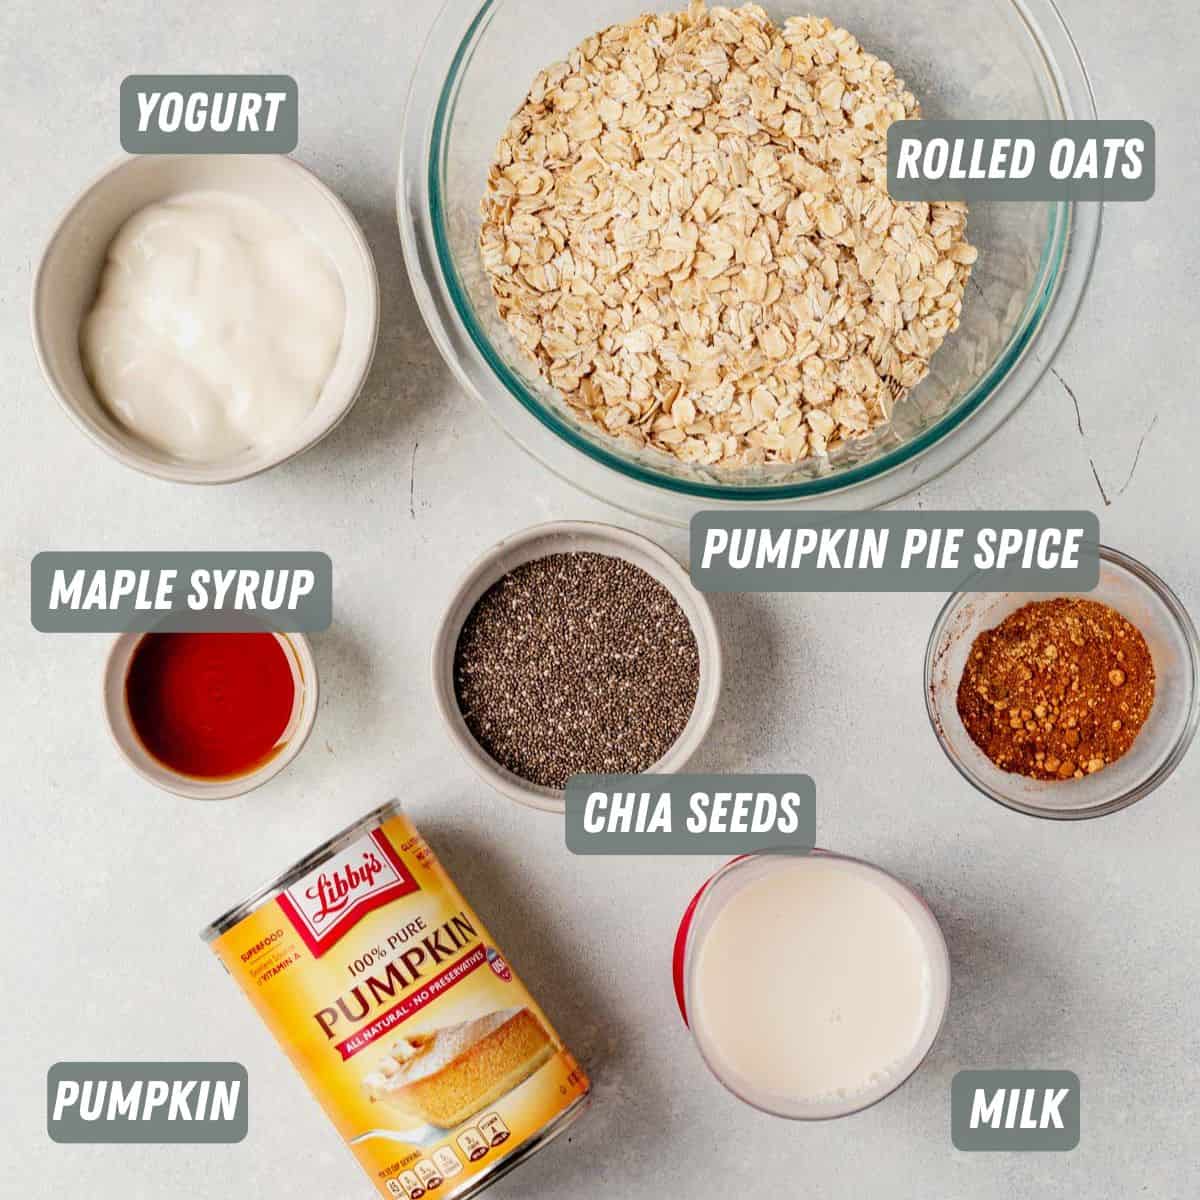 pumpkin pie spice, pumpkin, chia seeds, oats, milk and yogurt measured on a table